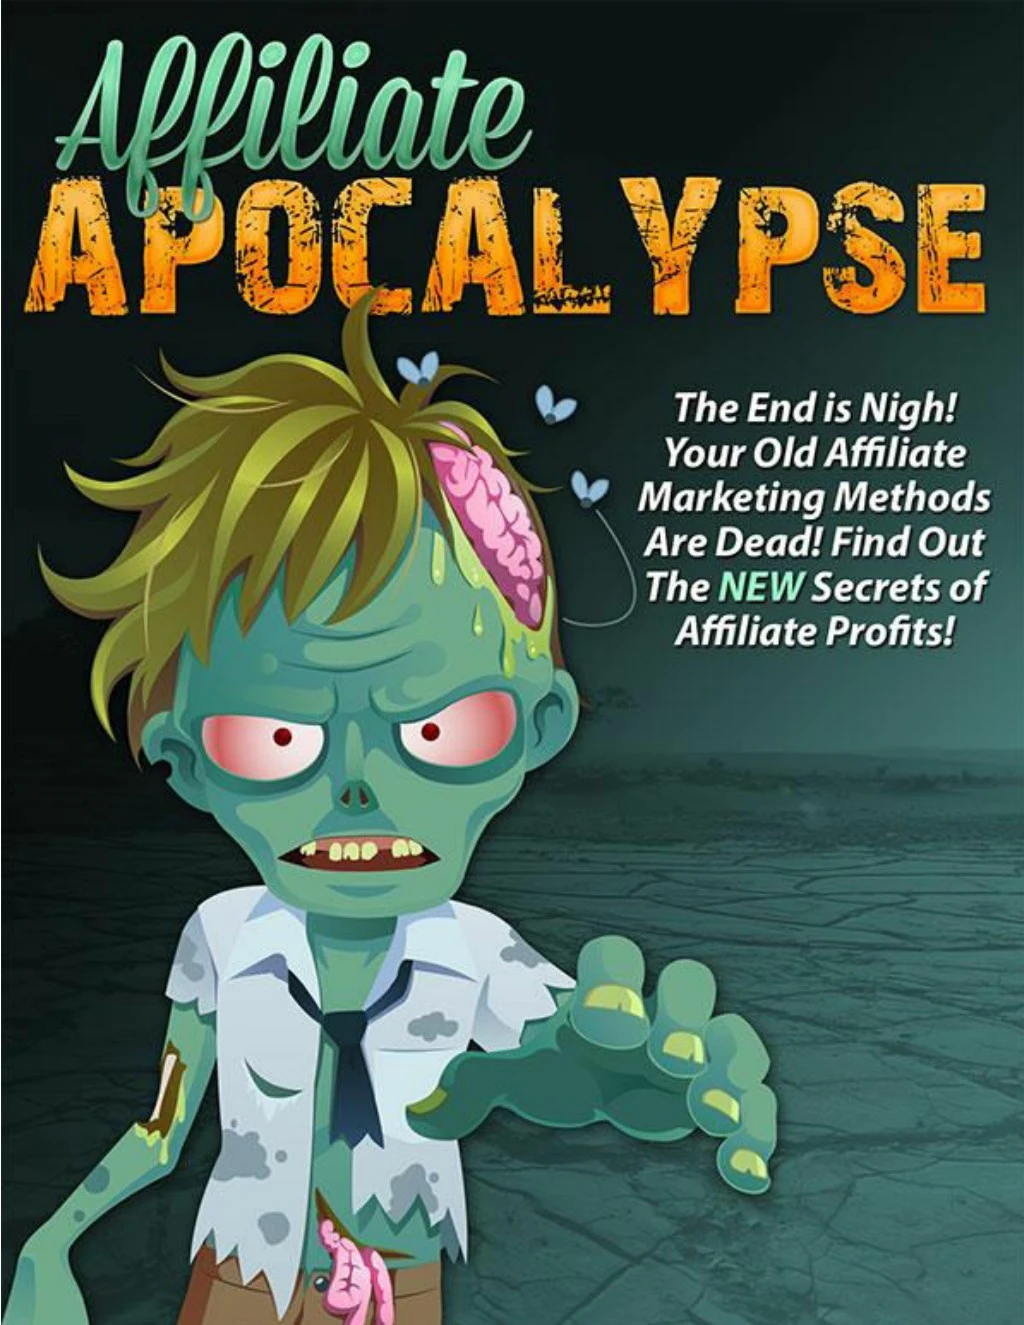 affiliate apocalypse